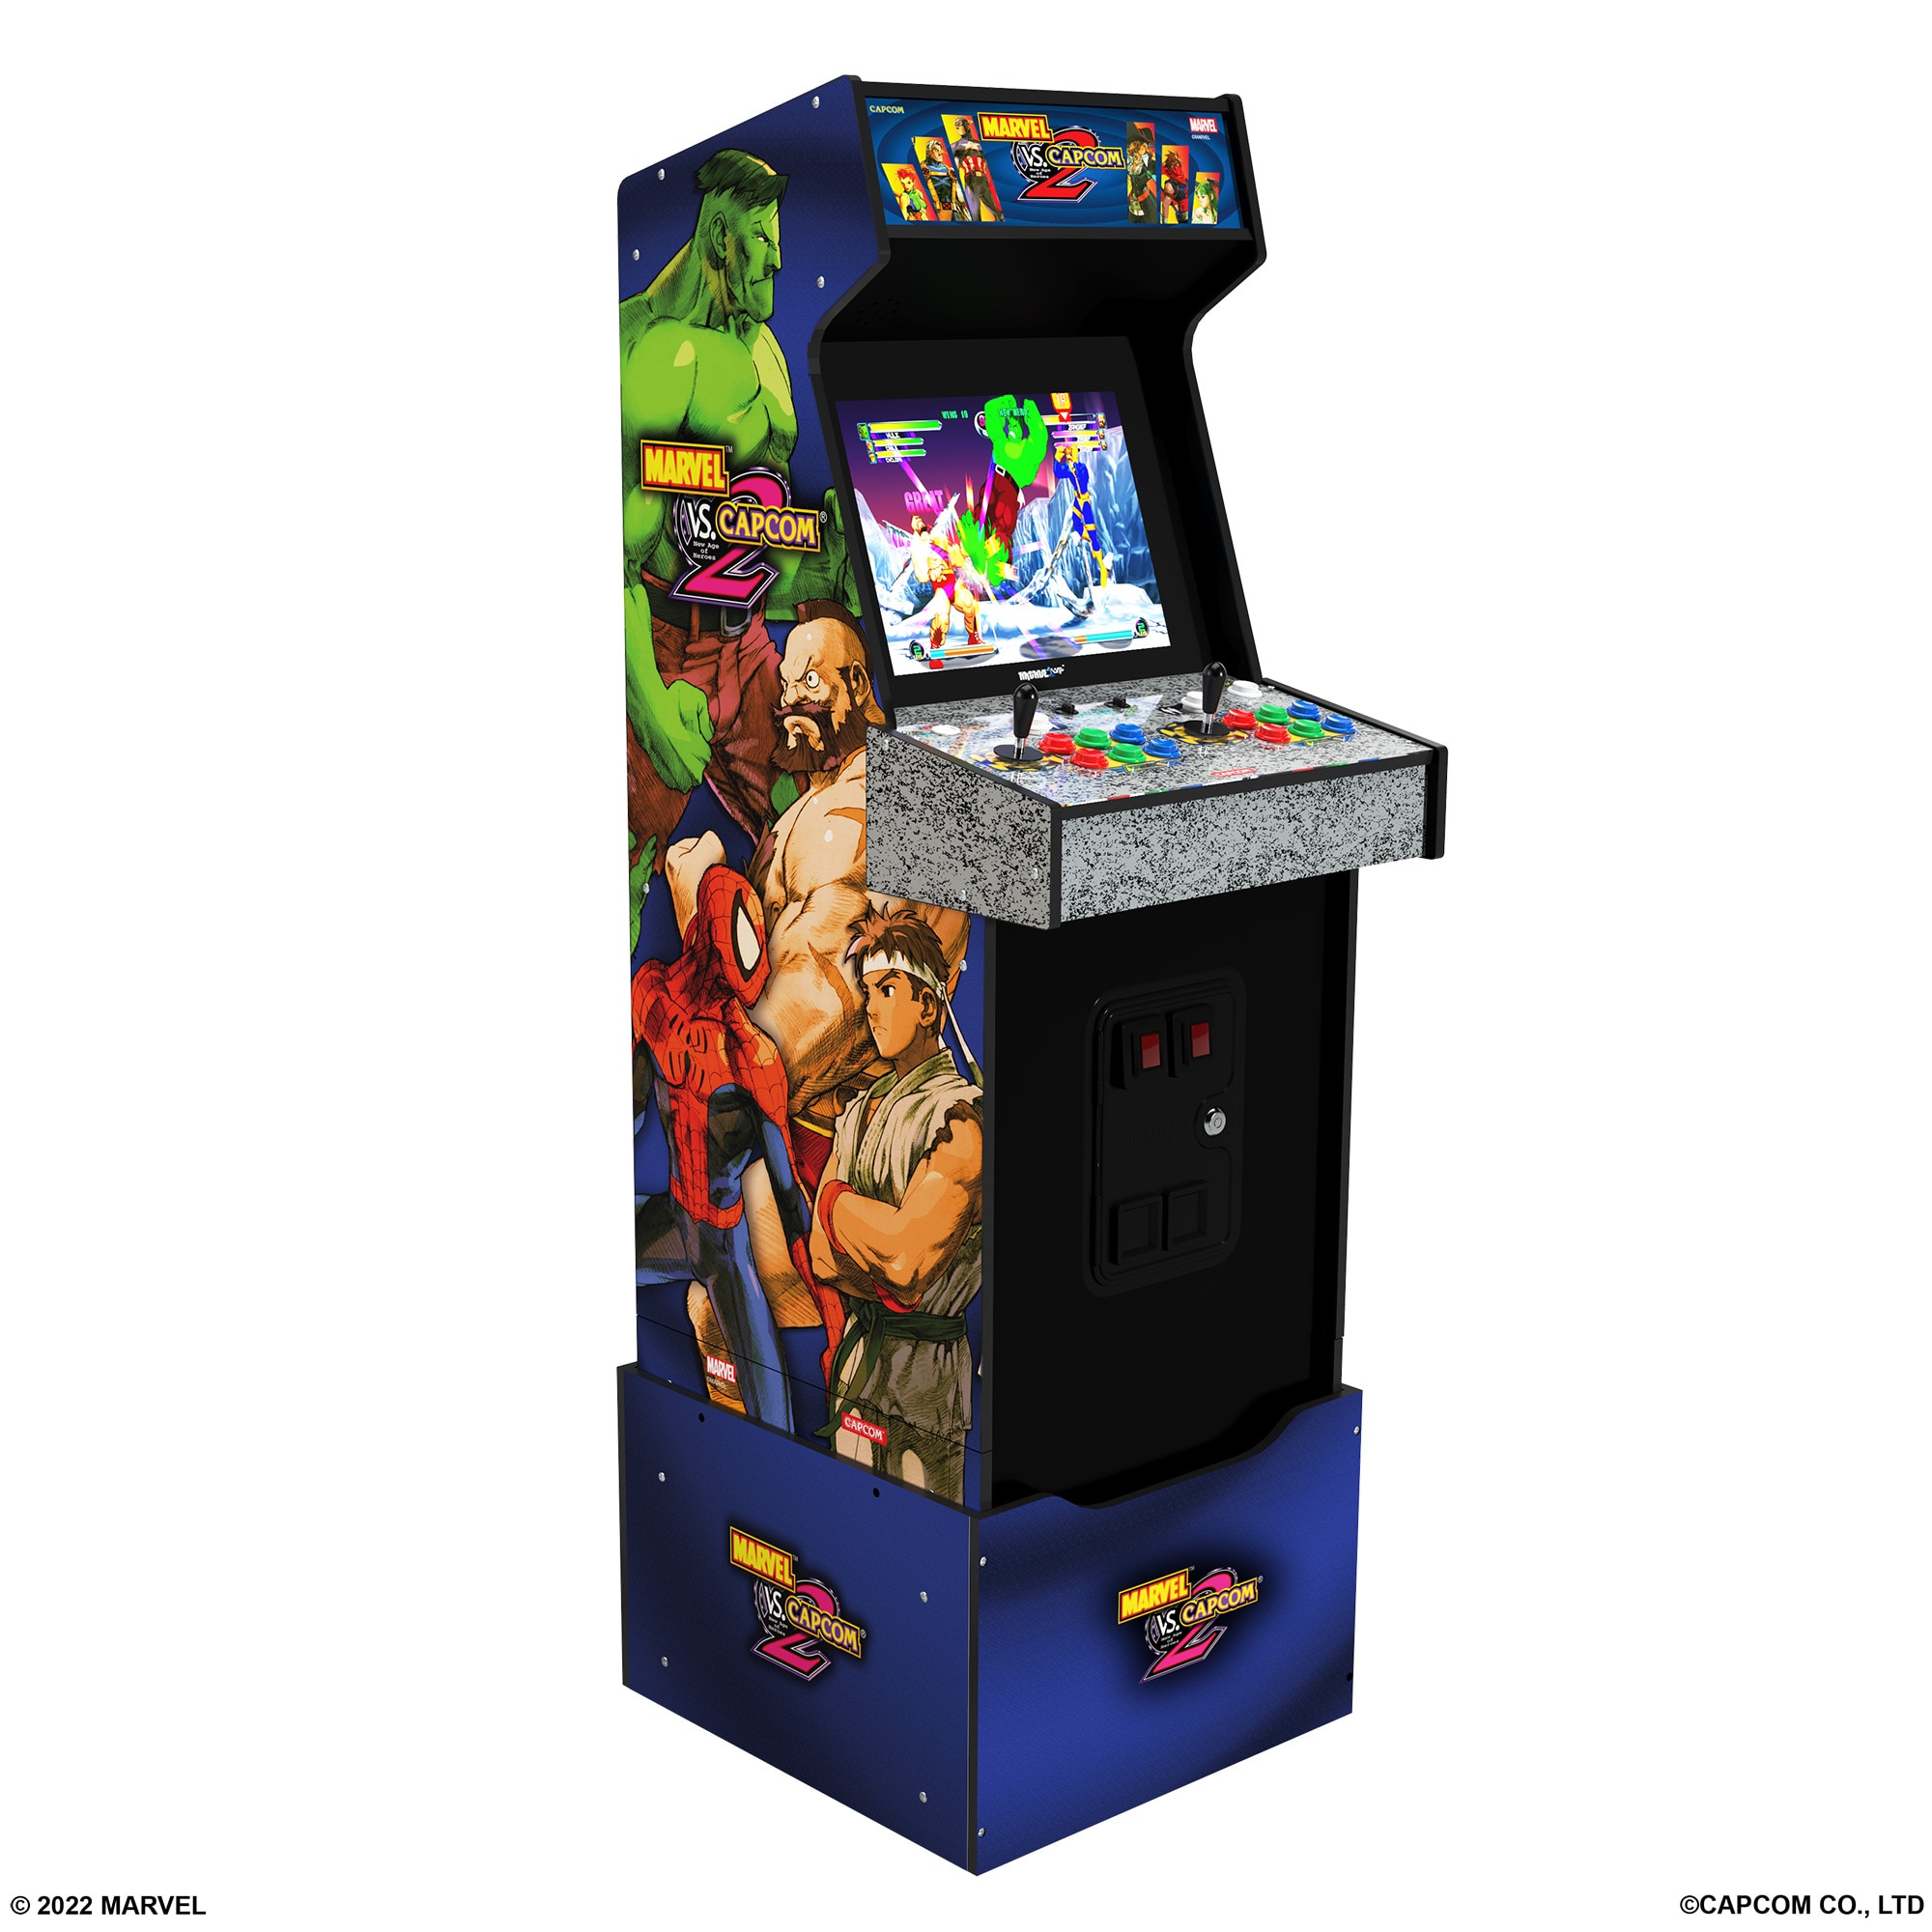 Mortal Kombat Online Play : r/Arcade1Up